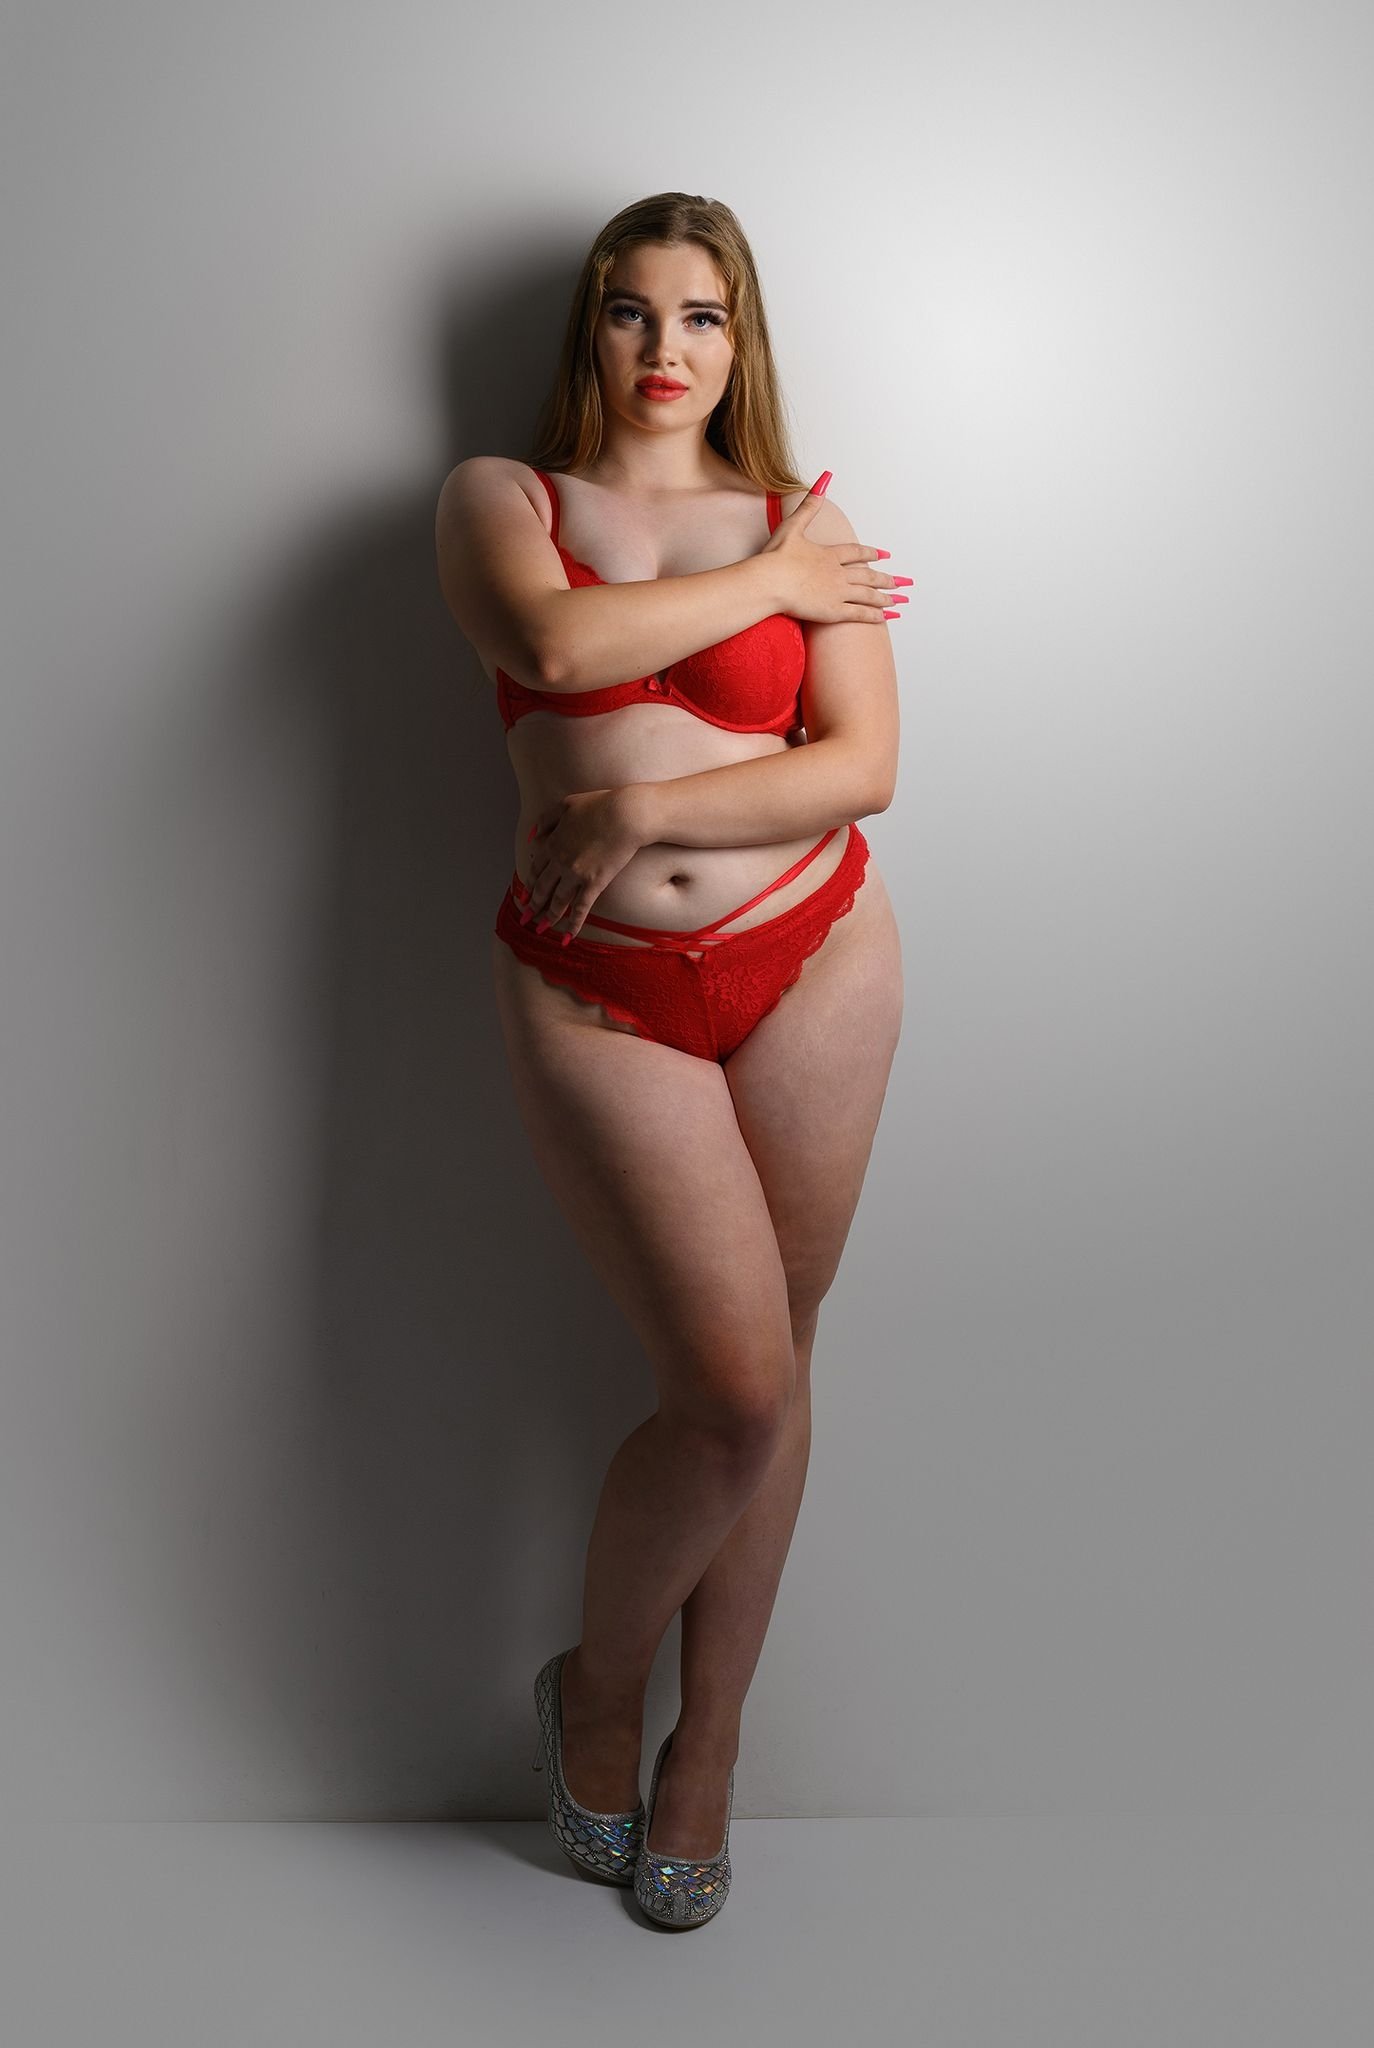 Meet Amazing Sexy Laura7: Top Escort Girl - model preview photo 1 